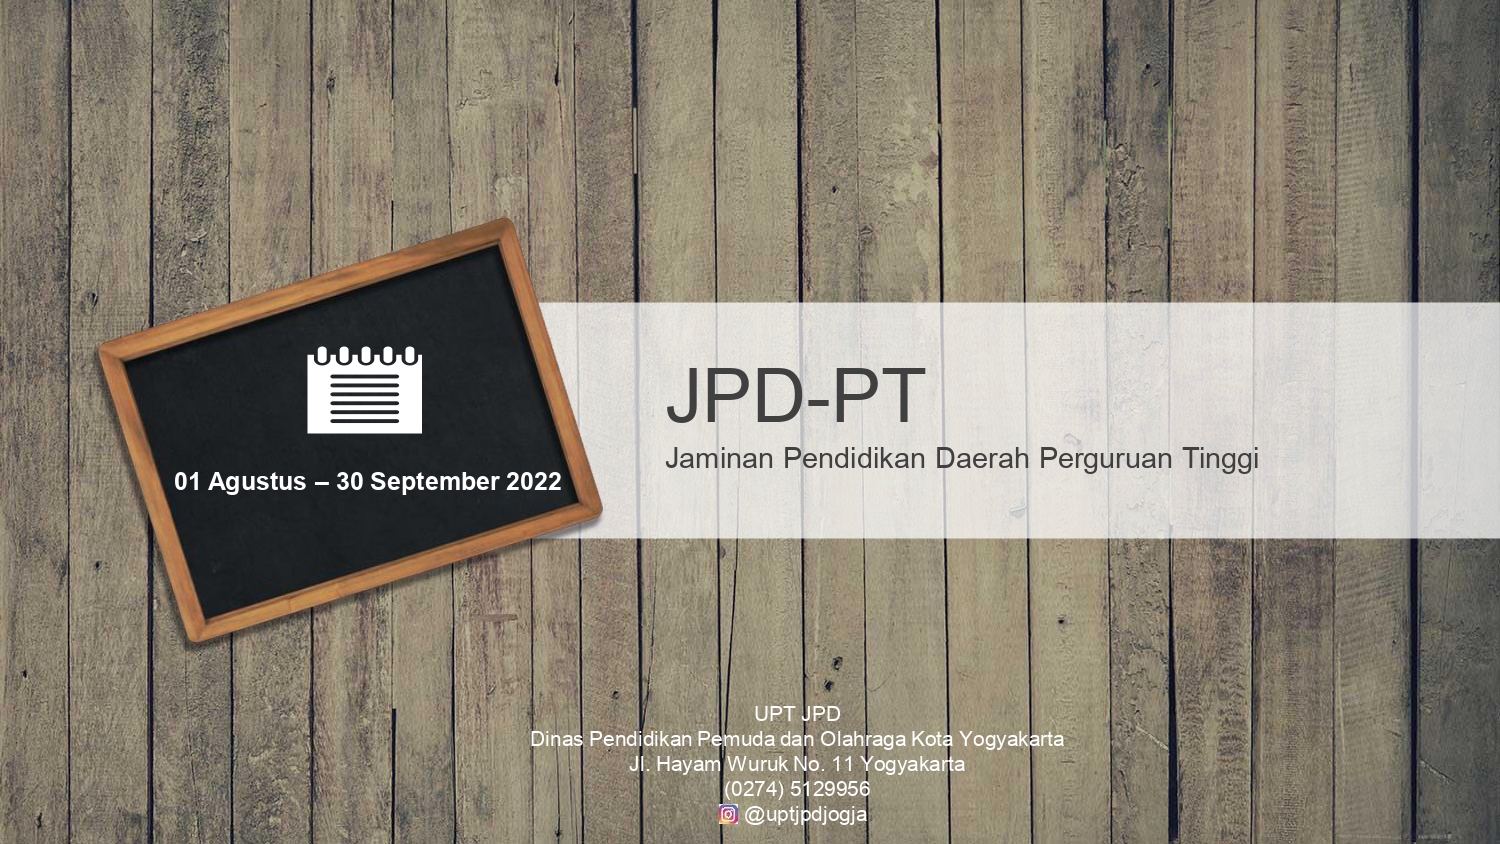 Jaminan Pendidikan Daerah Perguruan Tinggi (JPD-PT)